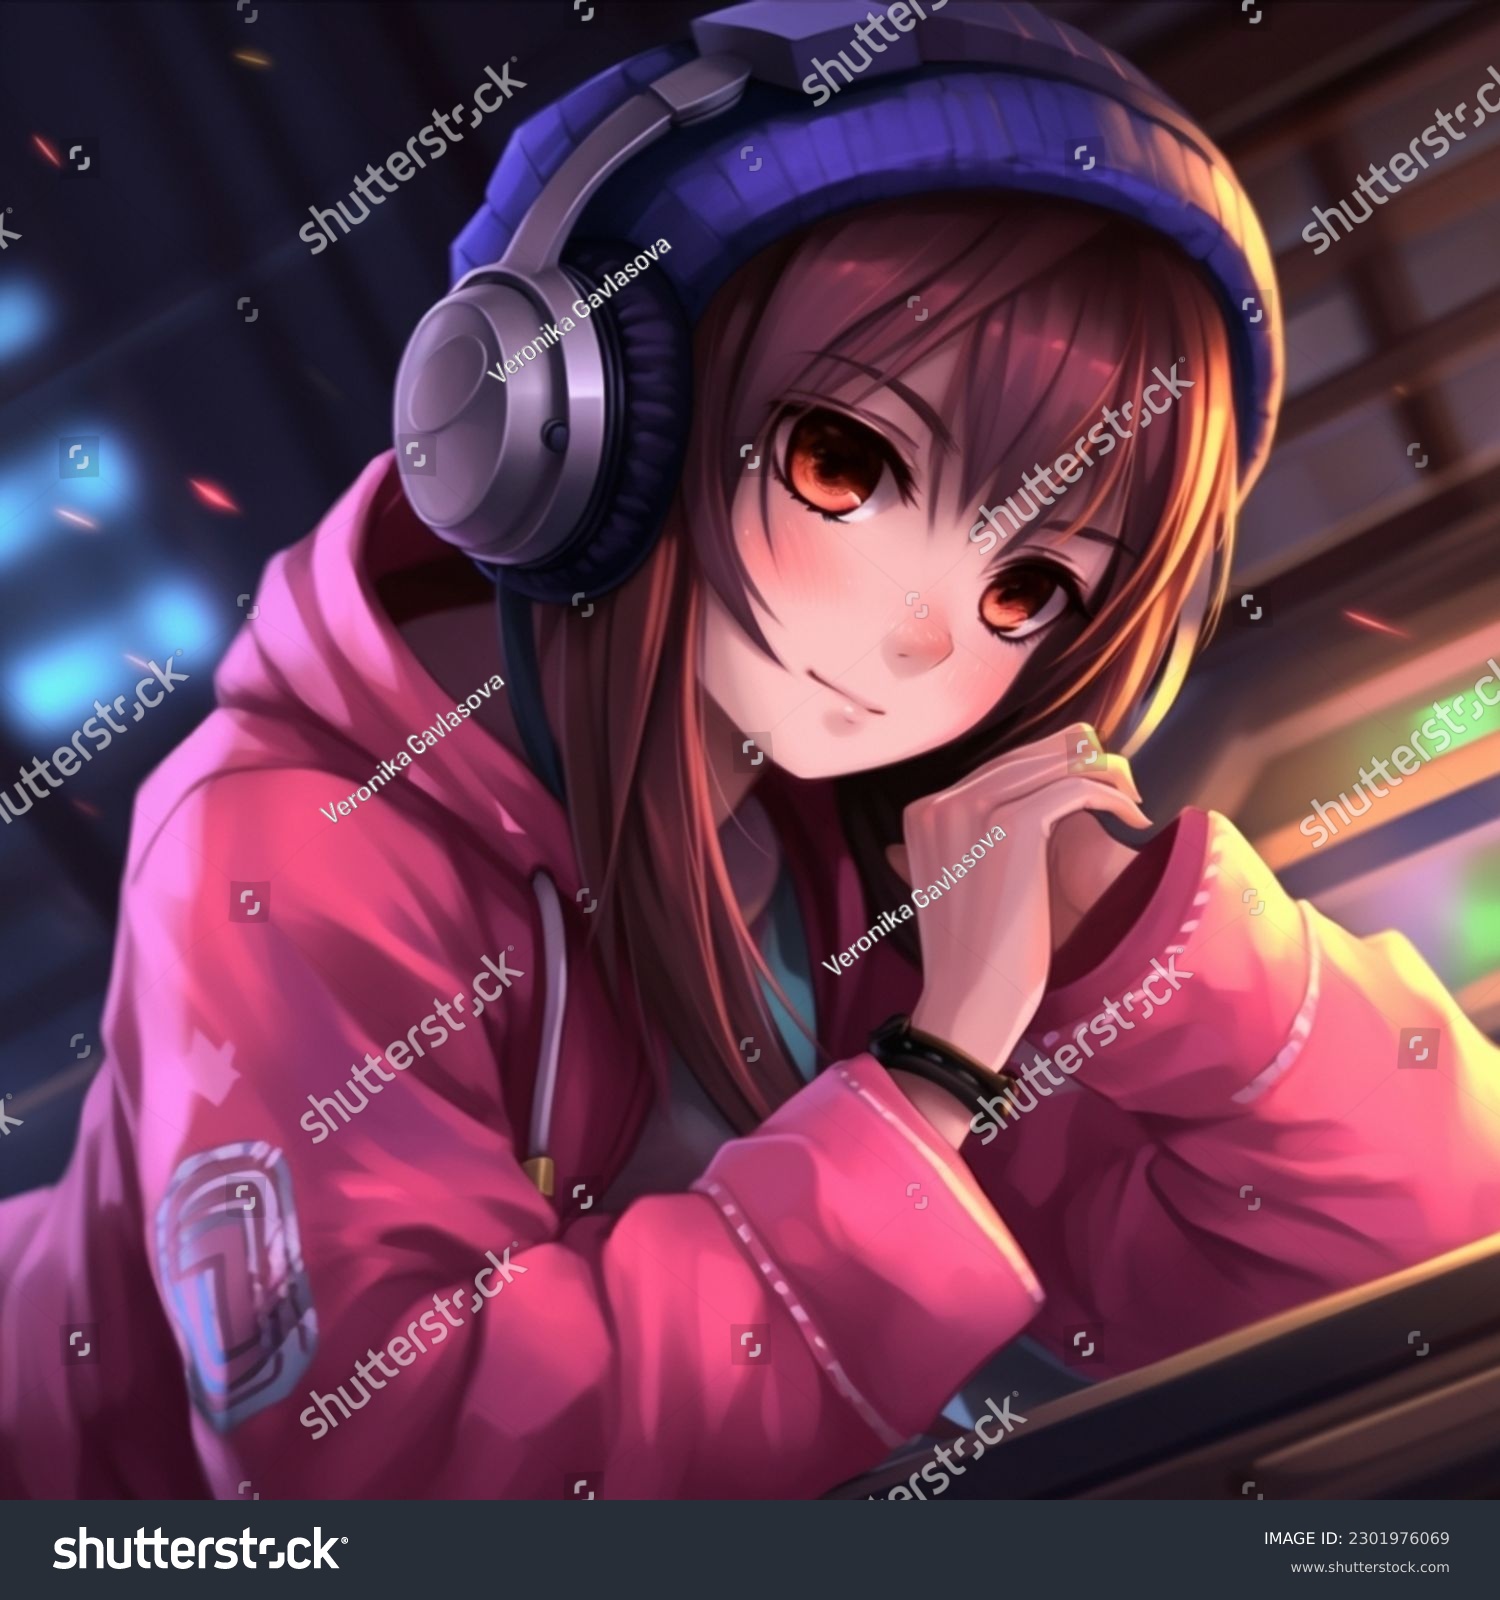 derek bergeron add photo manga girl with headphones